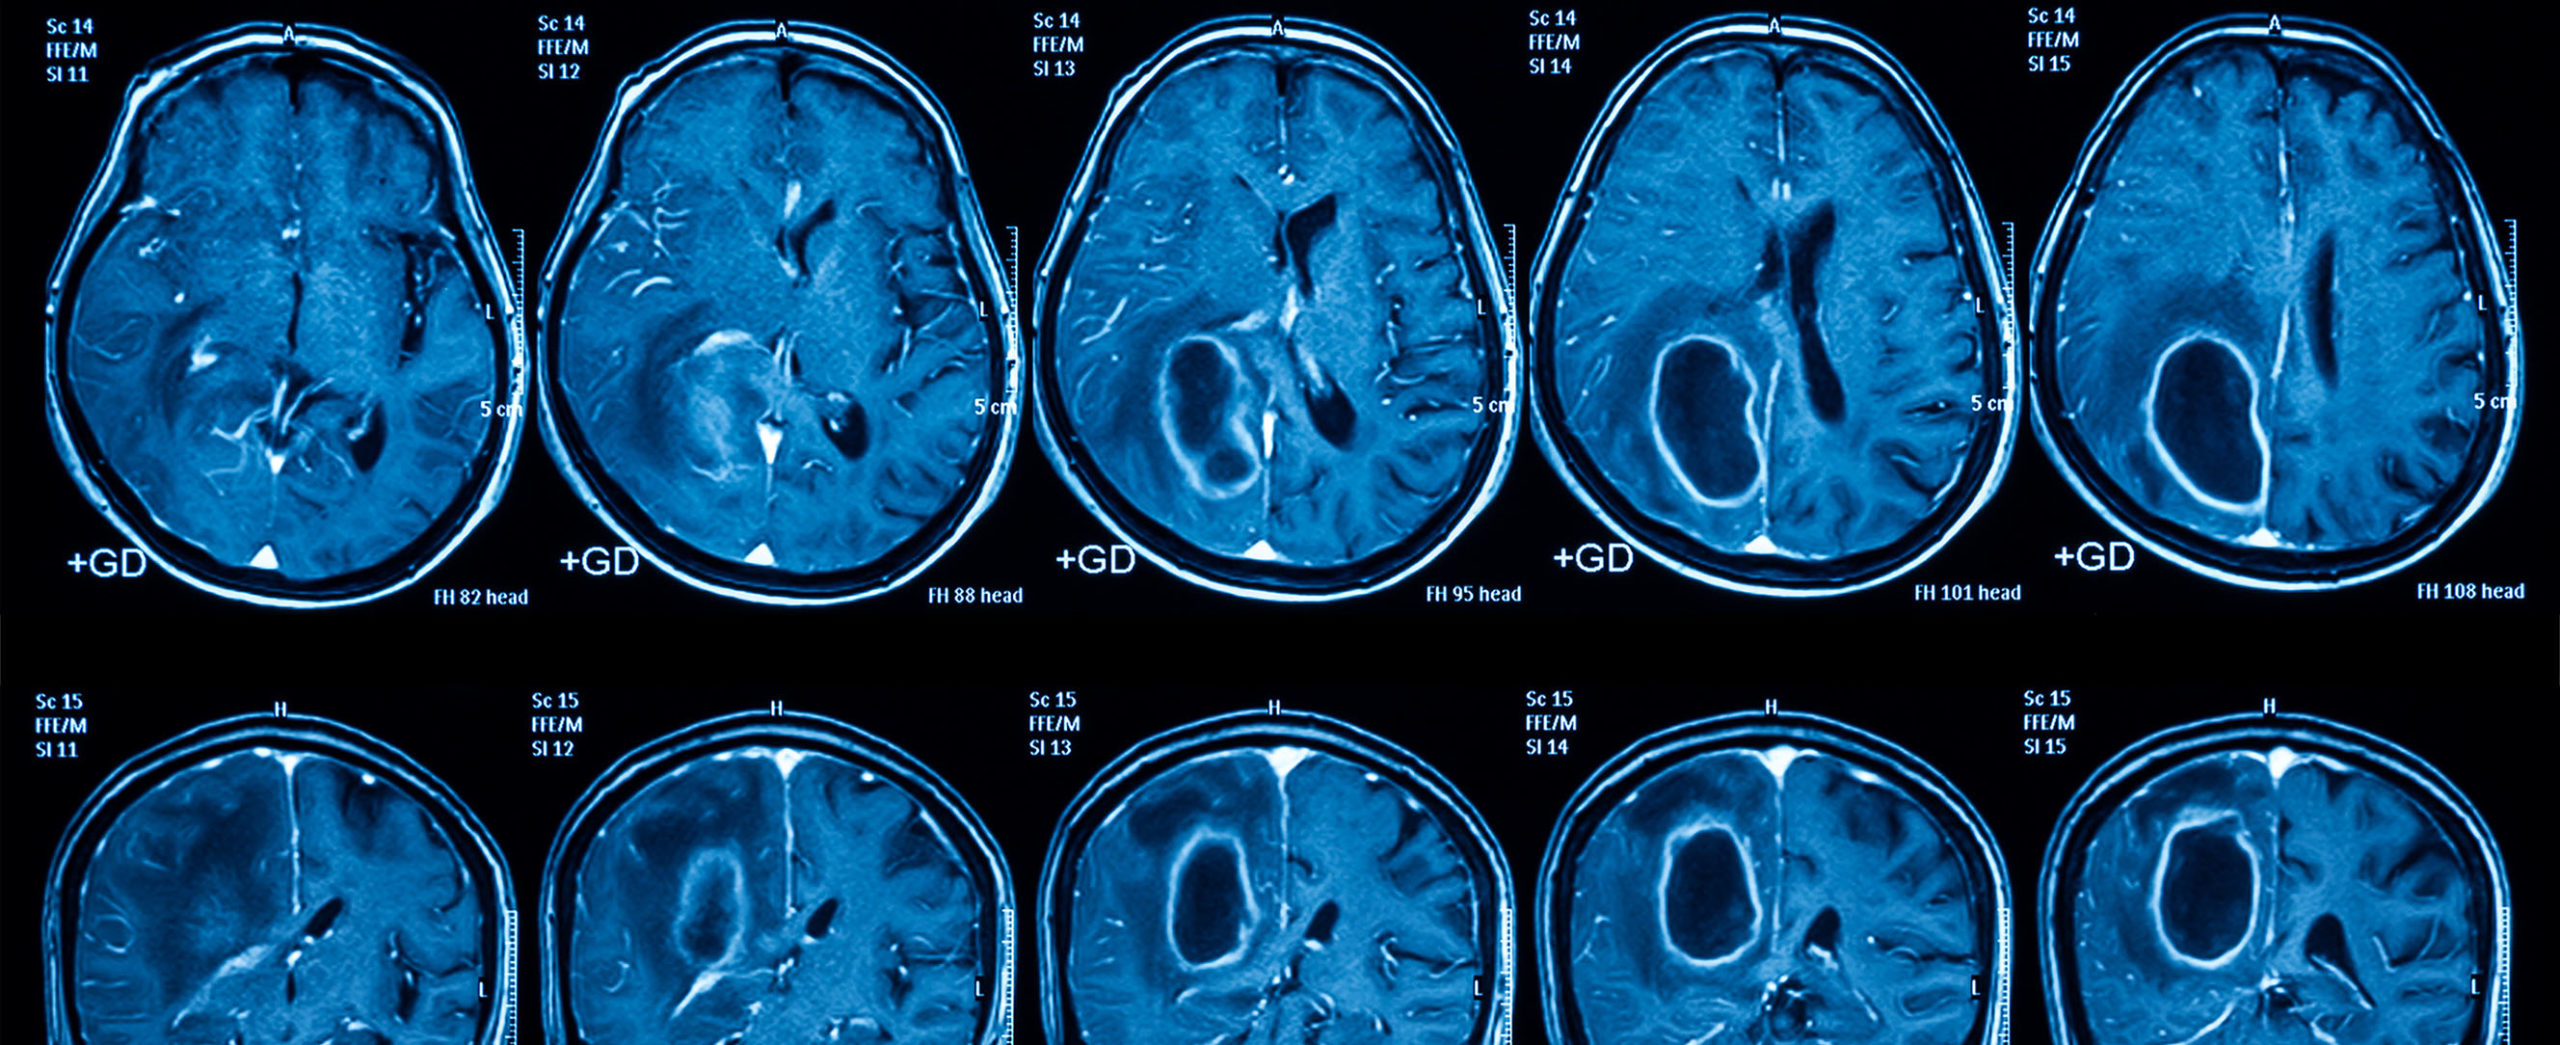 clinical trials for brain tumors